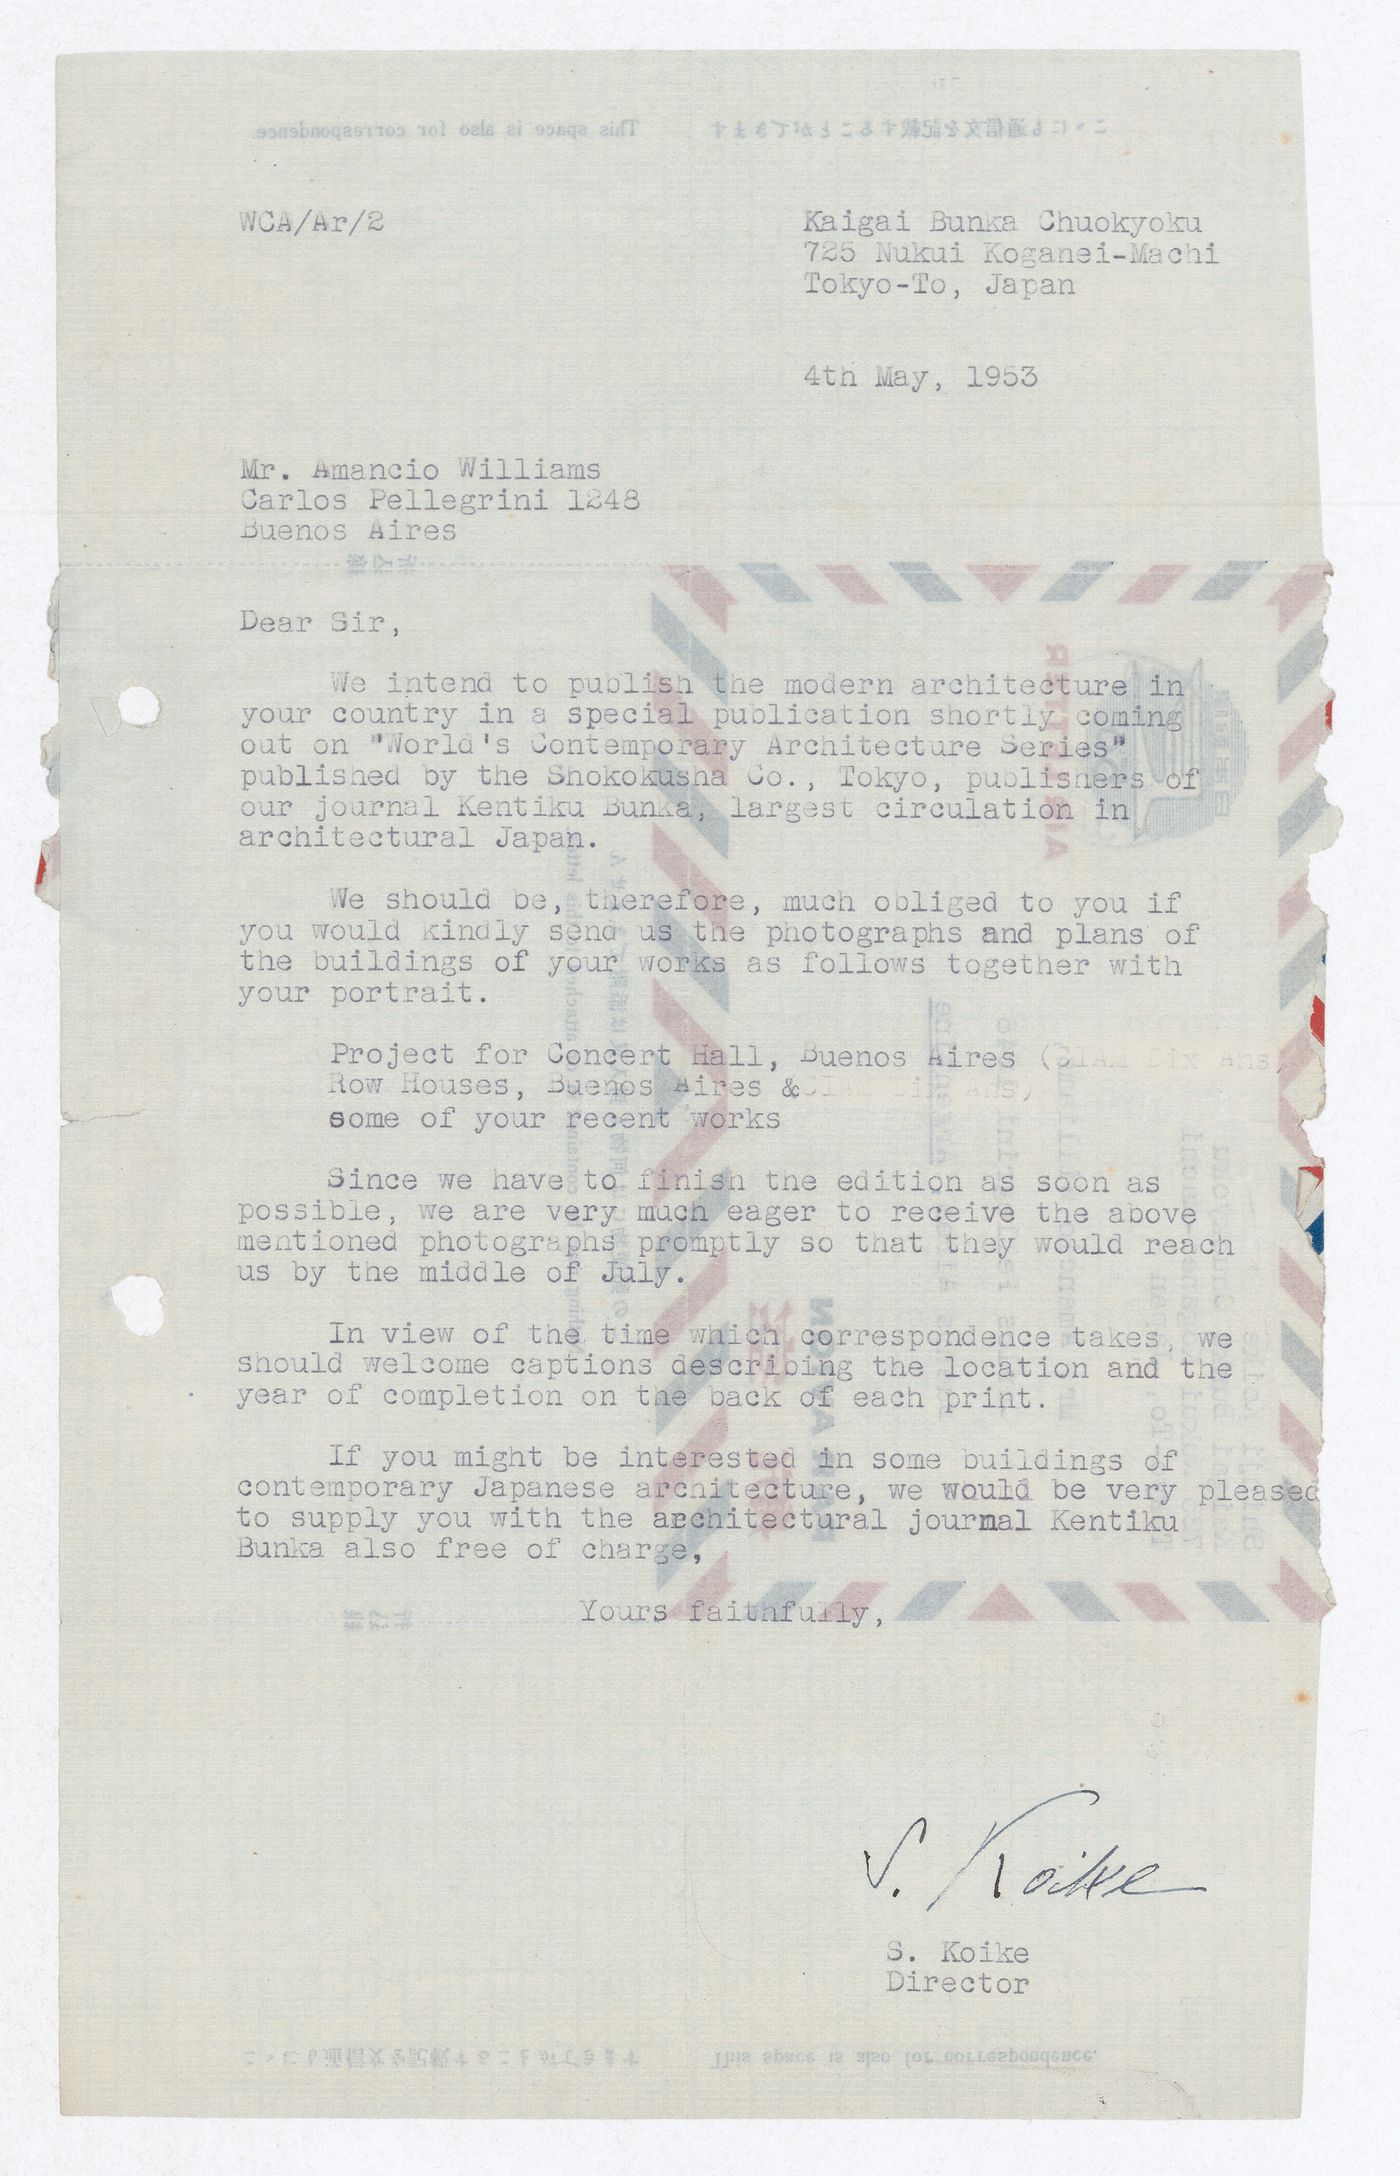 Correspondence, letter to Amancio Williams from S. Koike